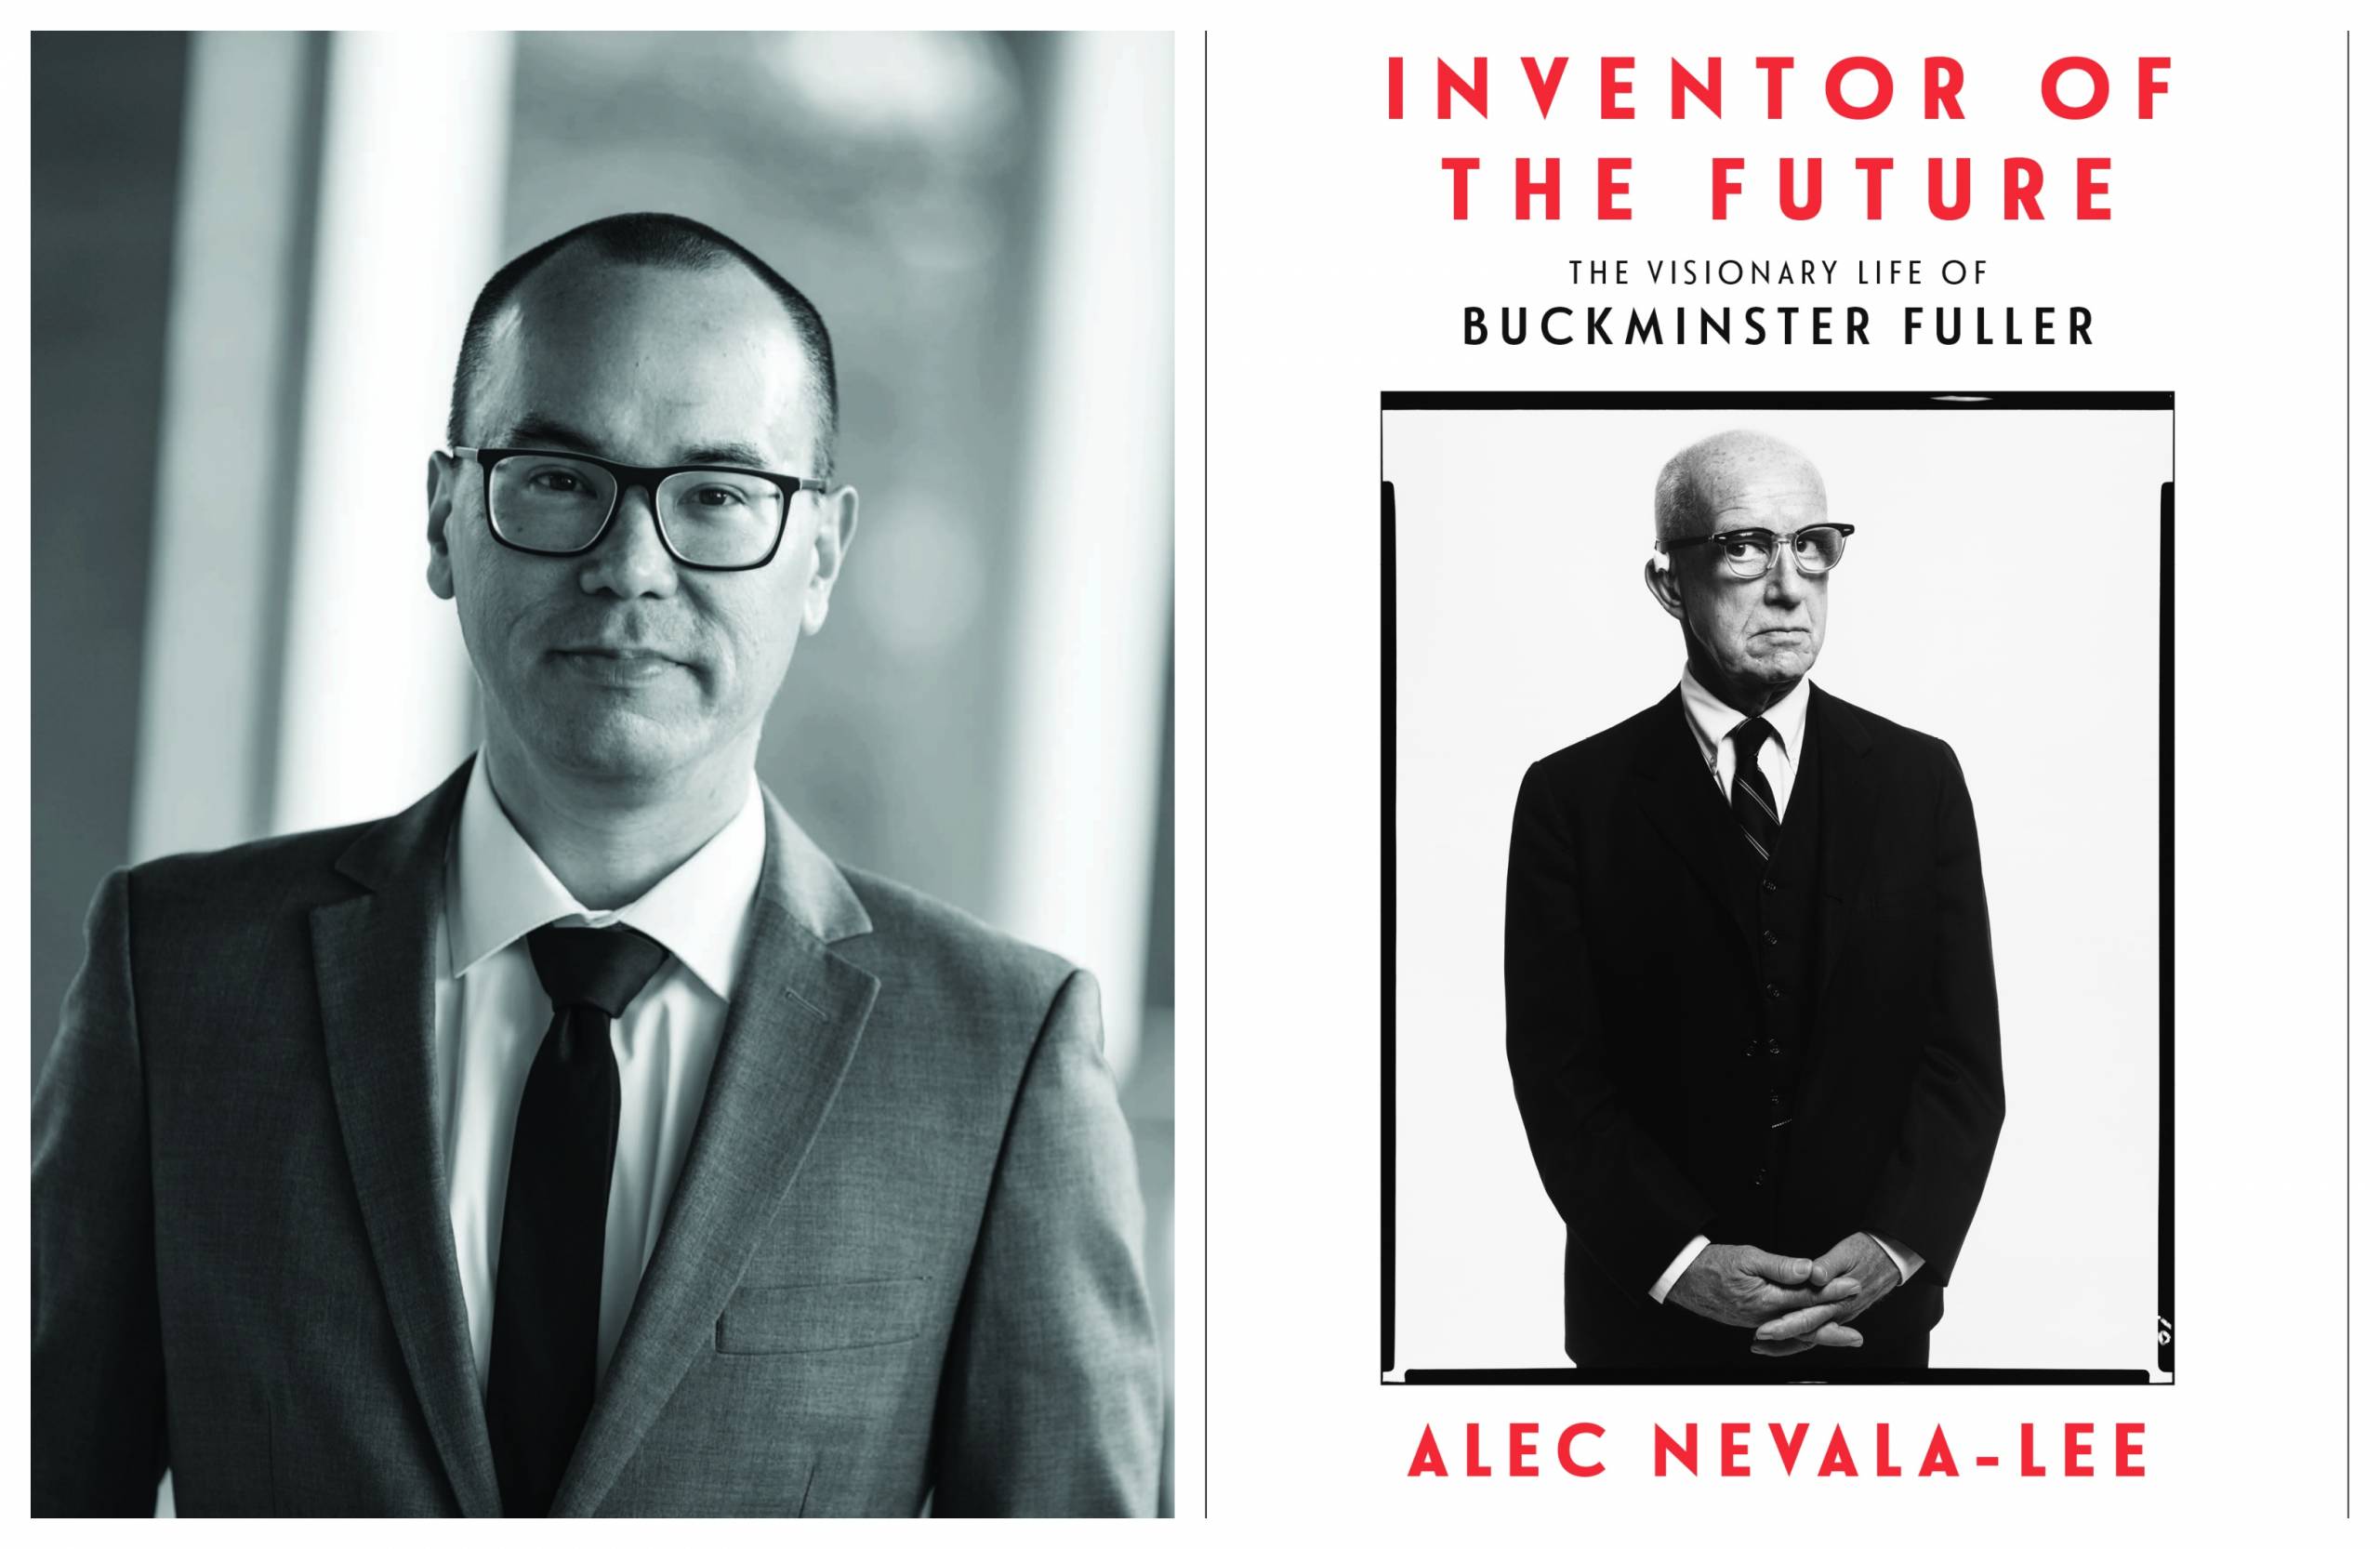 Alec Nevala-Lee on Buckminster Fuller, 'Inventor of the Future' - KQED